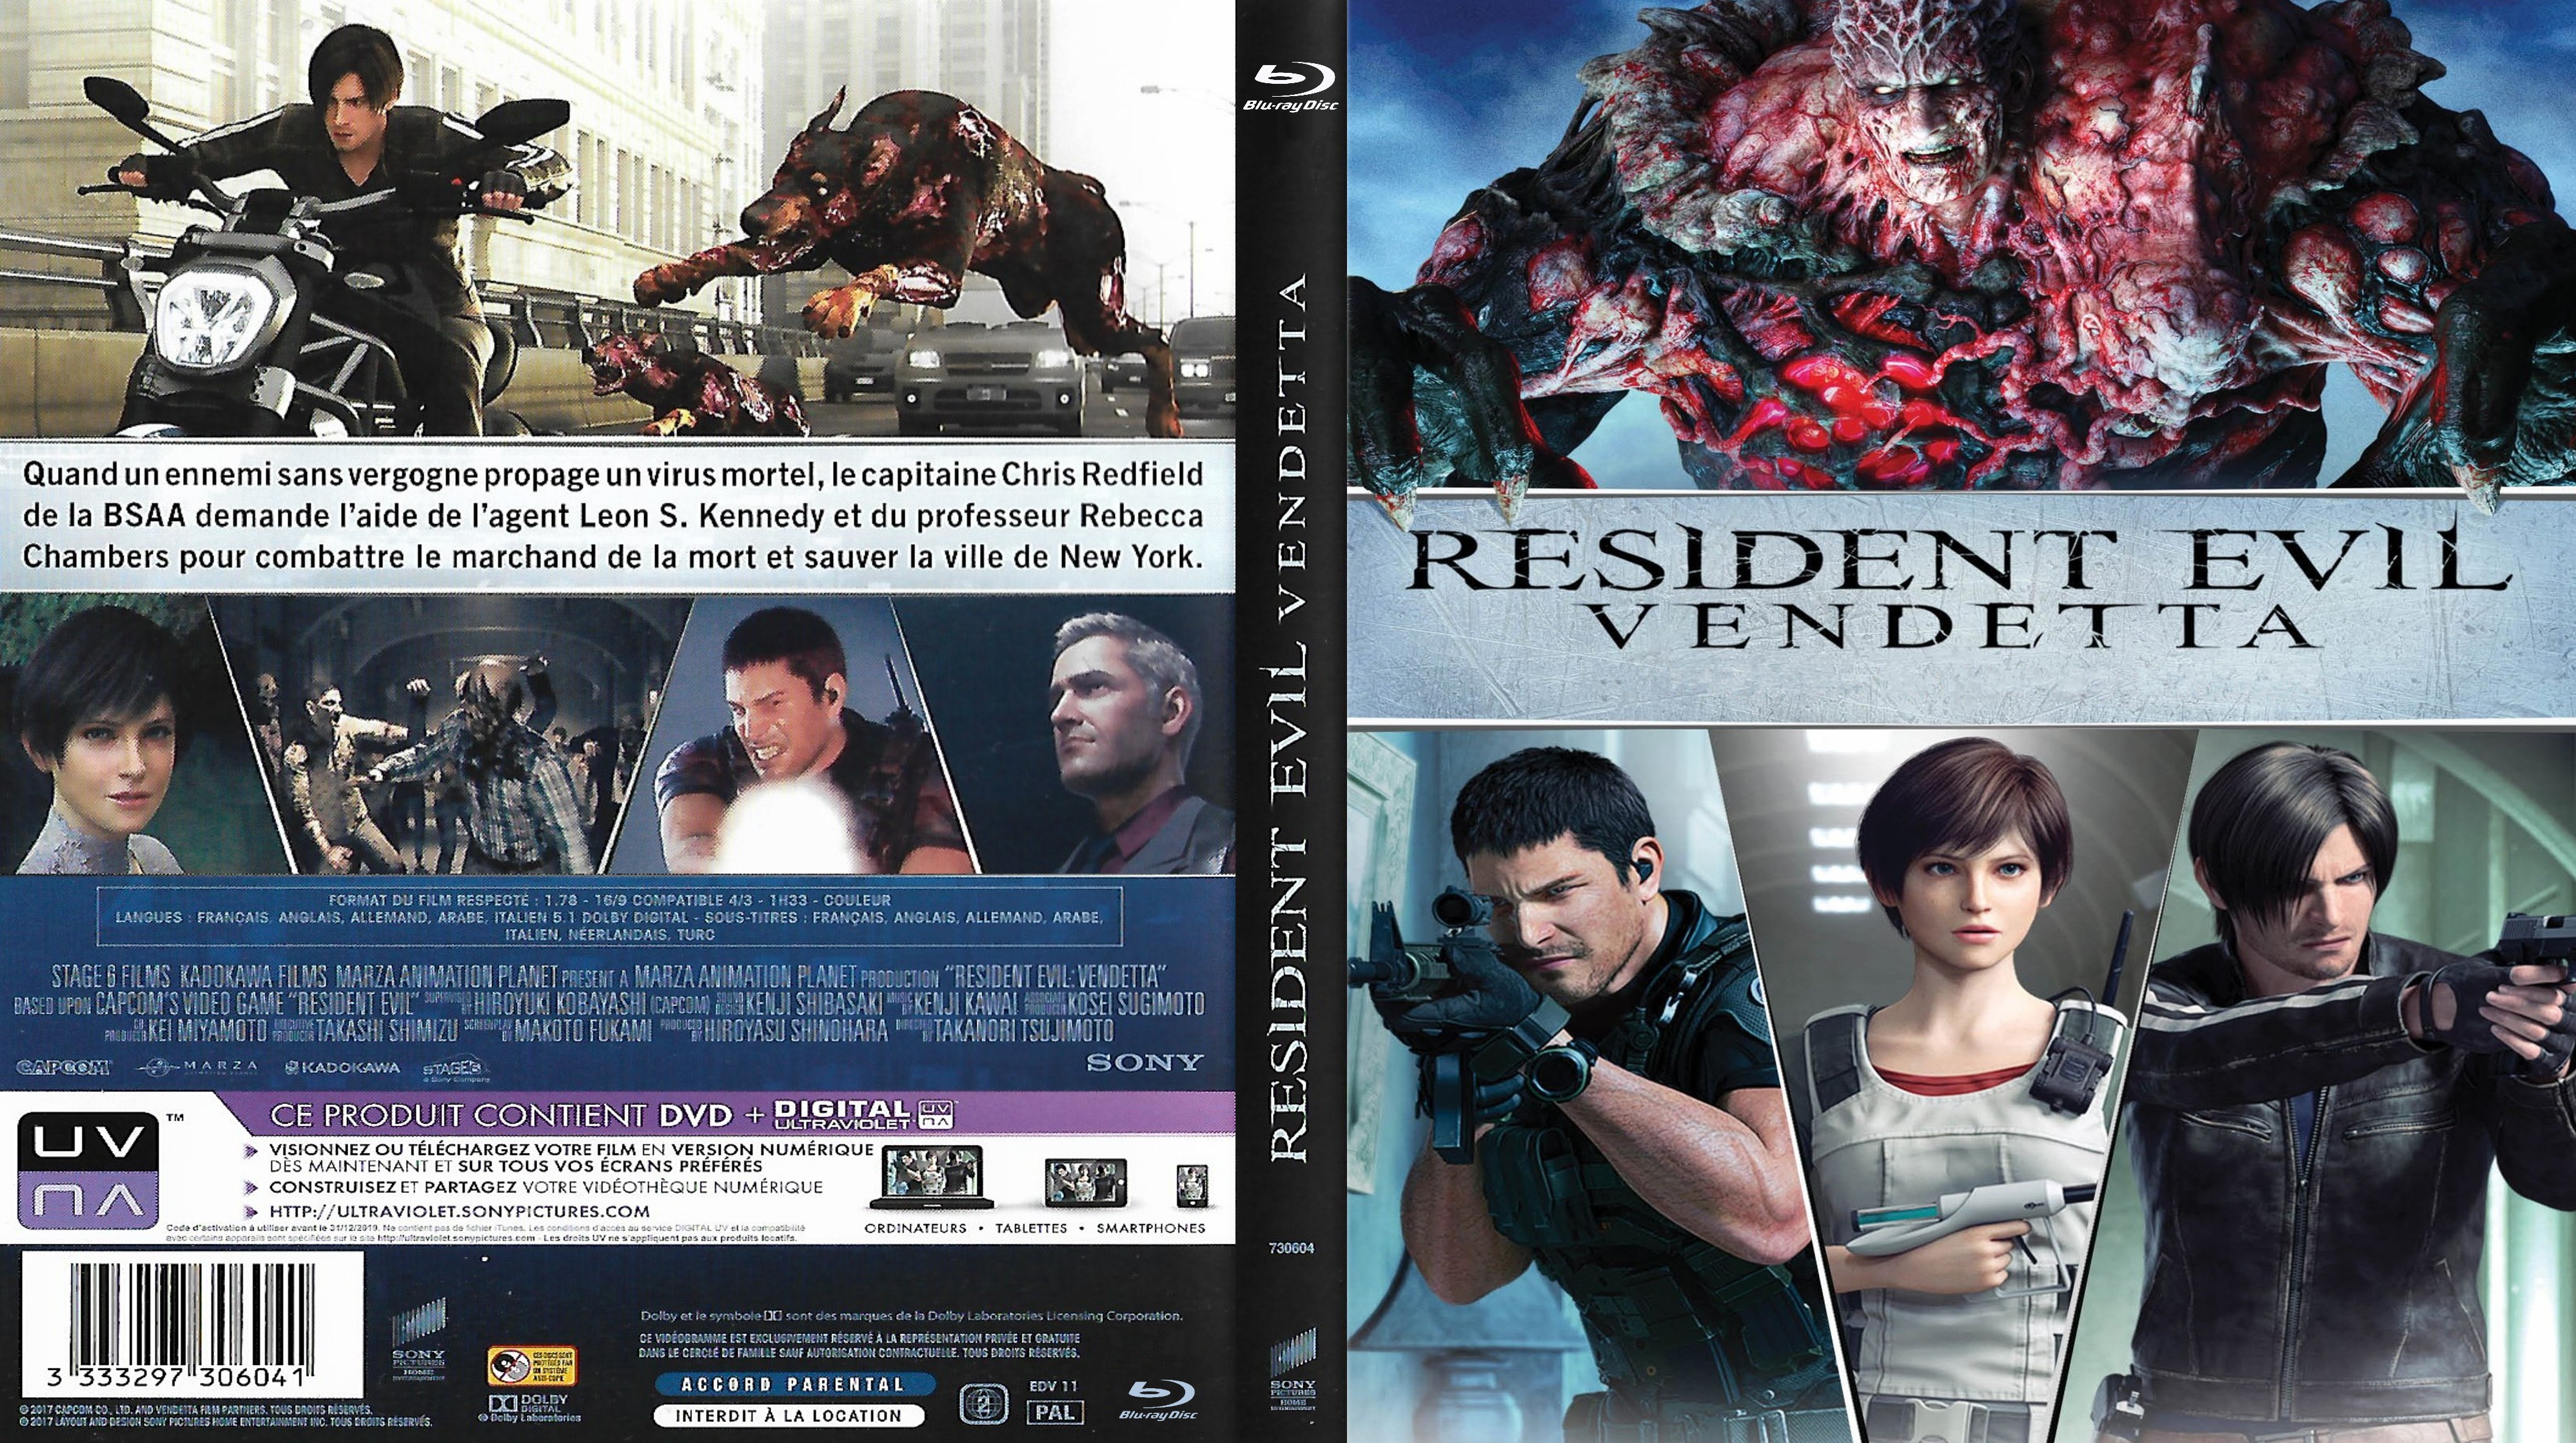 Jaquette DVD Resident evil vendetta (BLU-RAY)